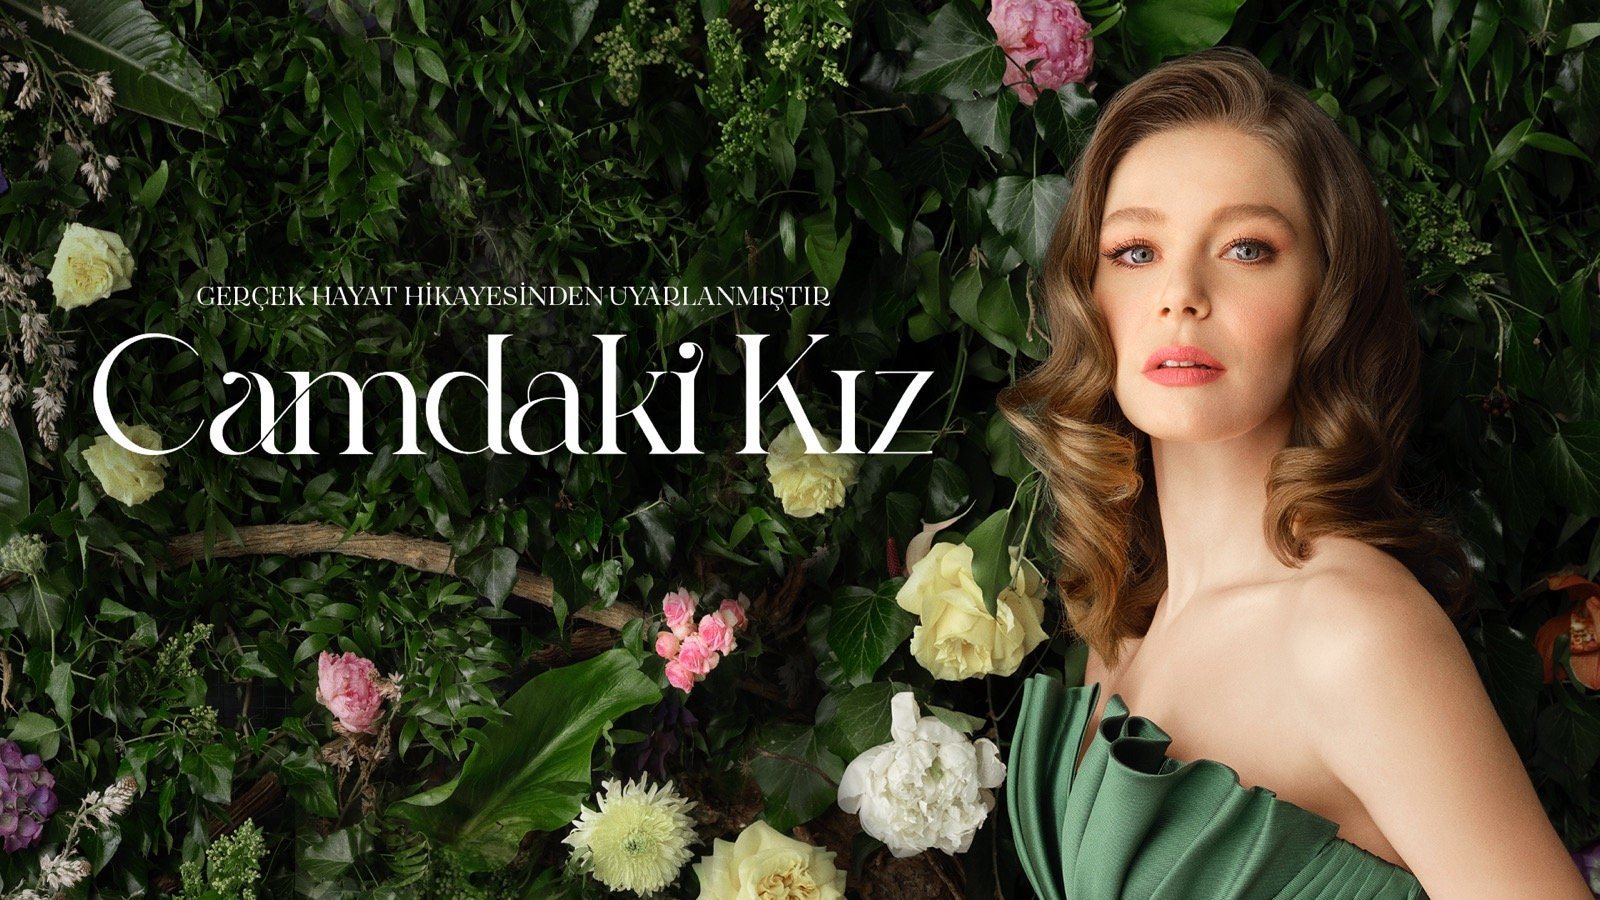 Camdaki Kiz (Girl in the Glass) Complete Series | Original Turkish Actor Voices with English, Spanish, Italian, Arabic Subtitles | Full 1080HD Turkish TV Series - Turkish TV Series